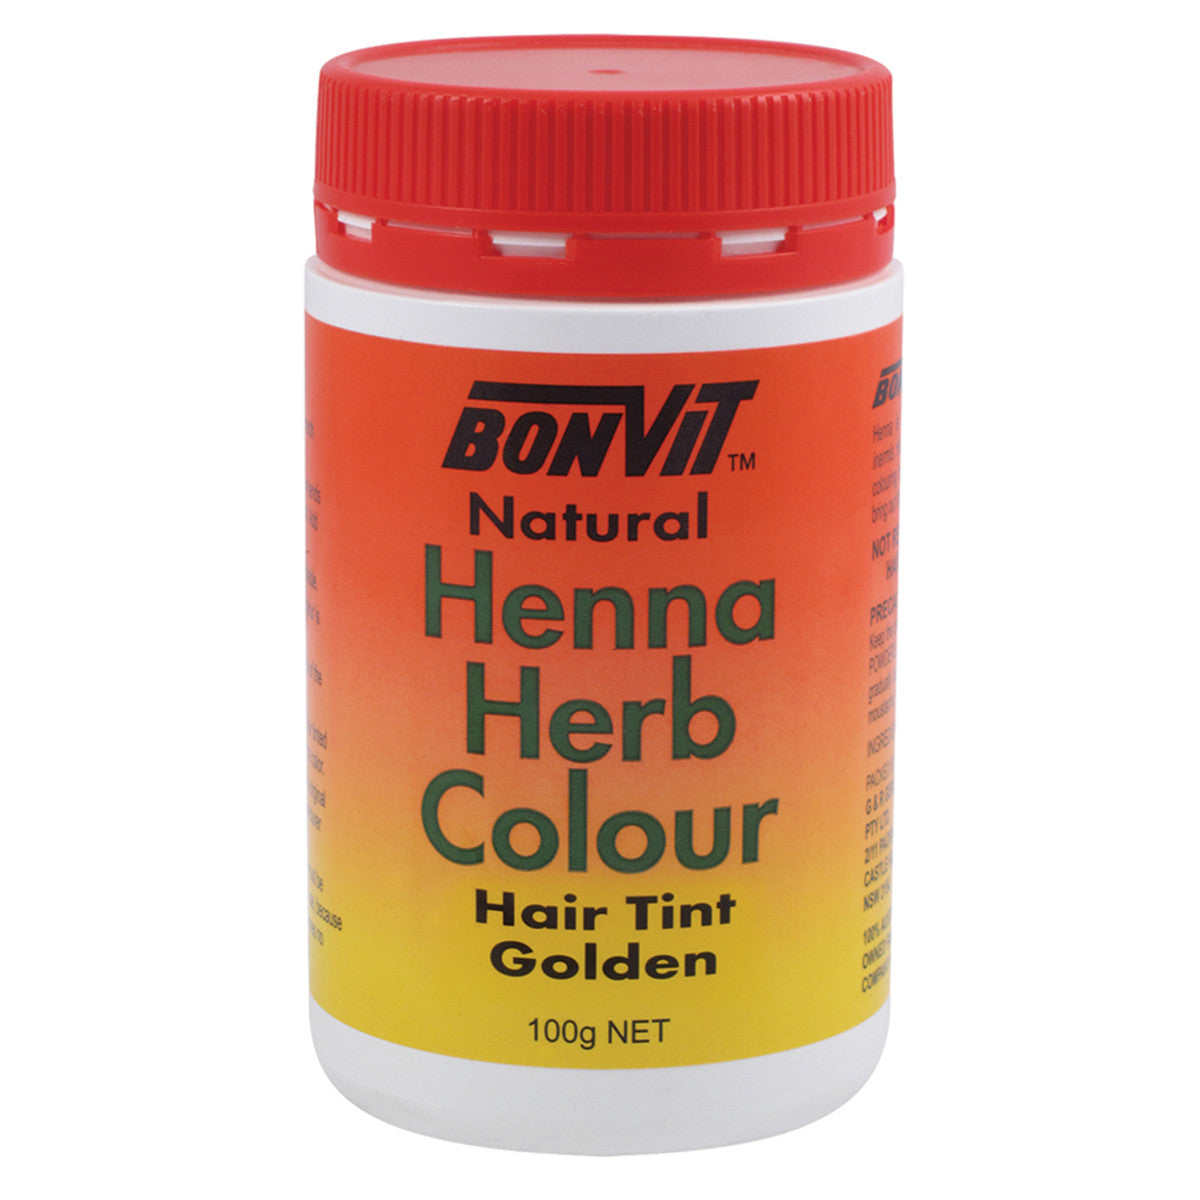 Bonvit - Henna Herb Colour Hair Tint Golden